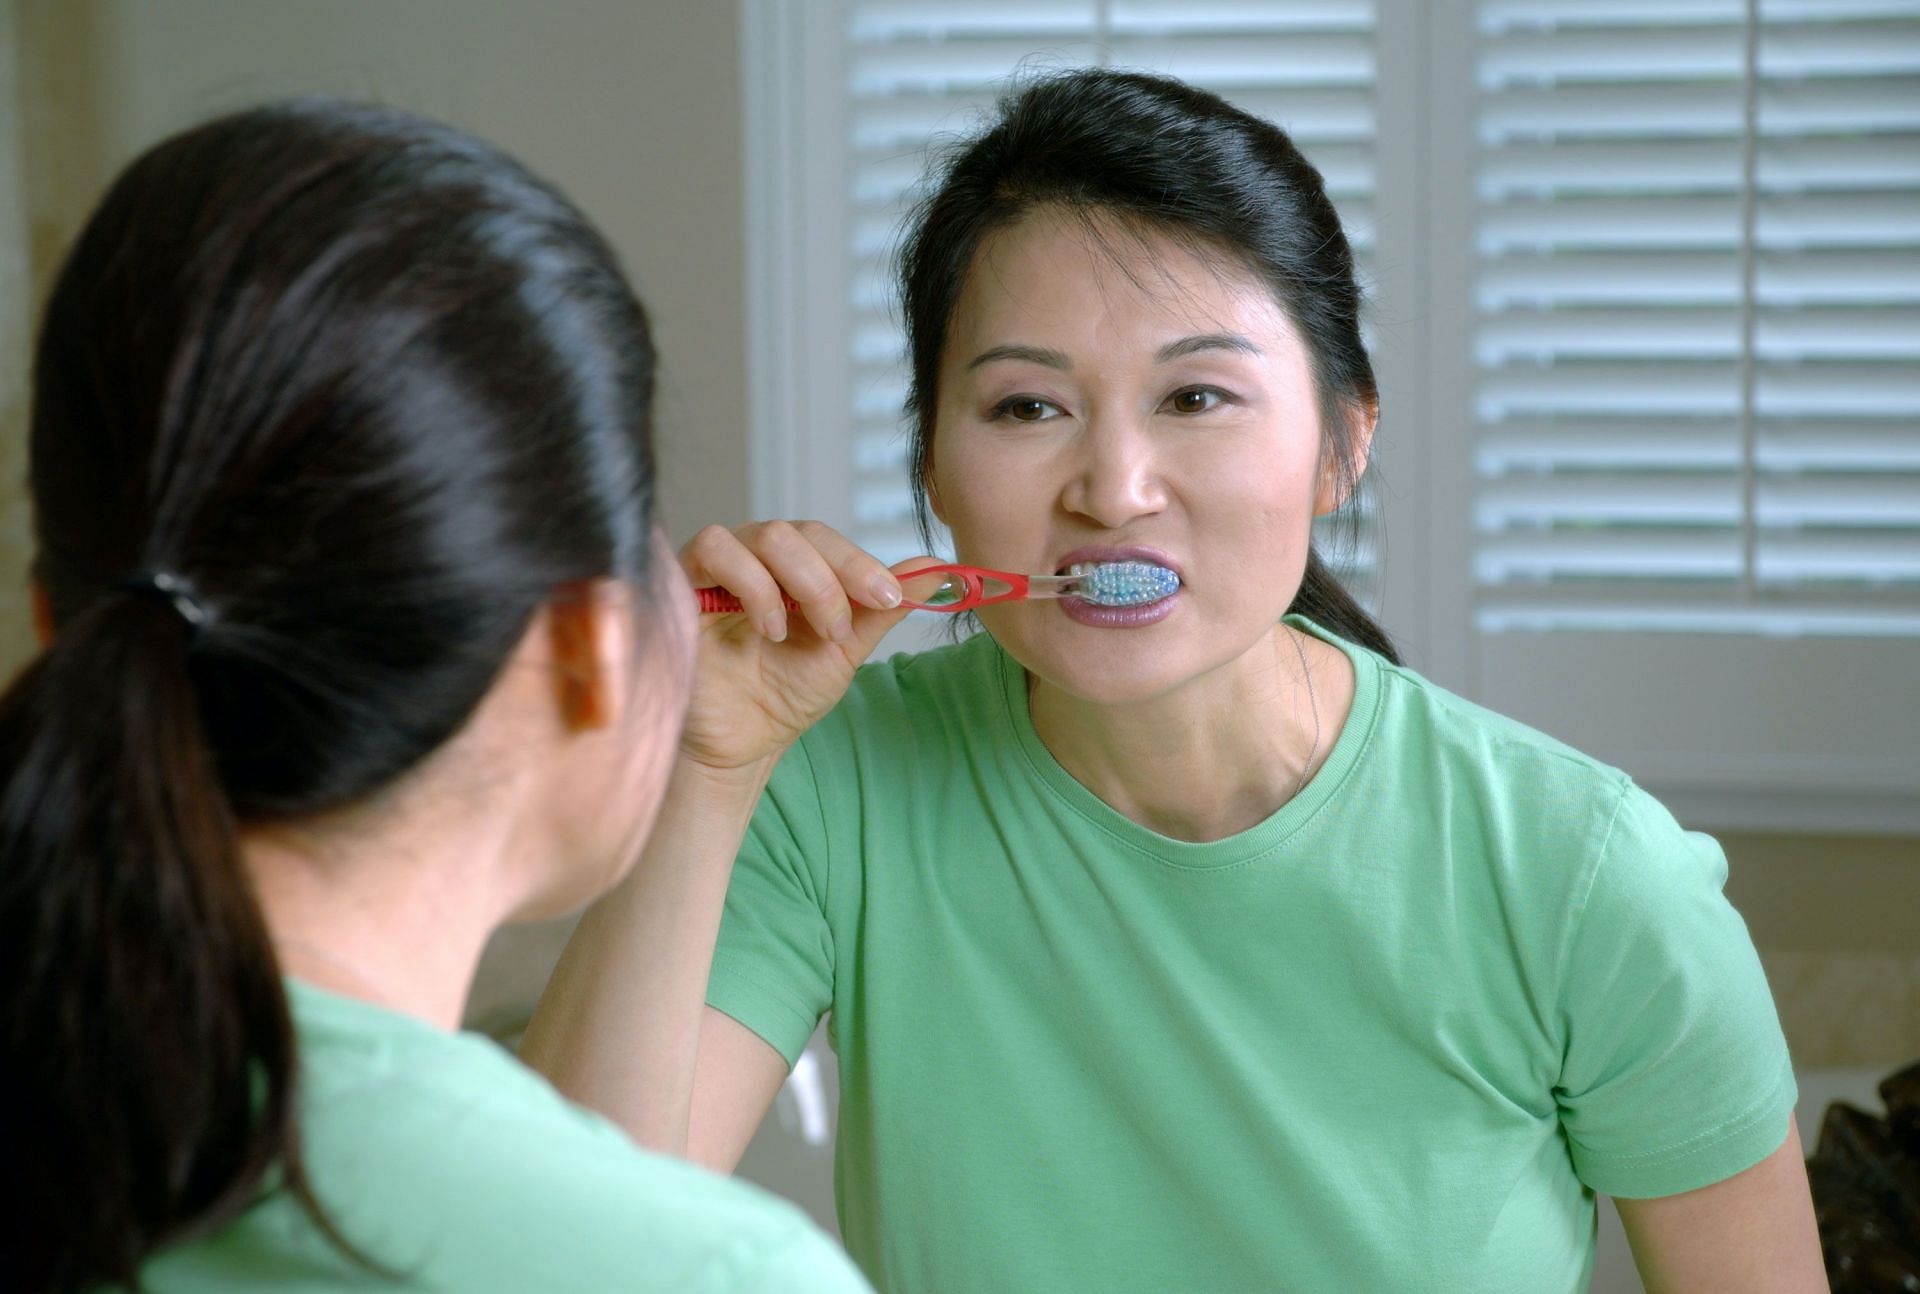 Oral hygiene is important. (Image via Unsplash/ National Cancer Institute)